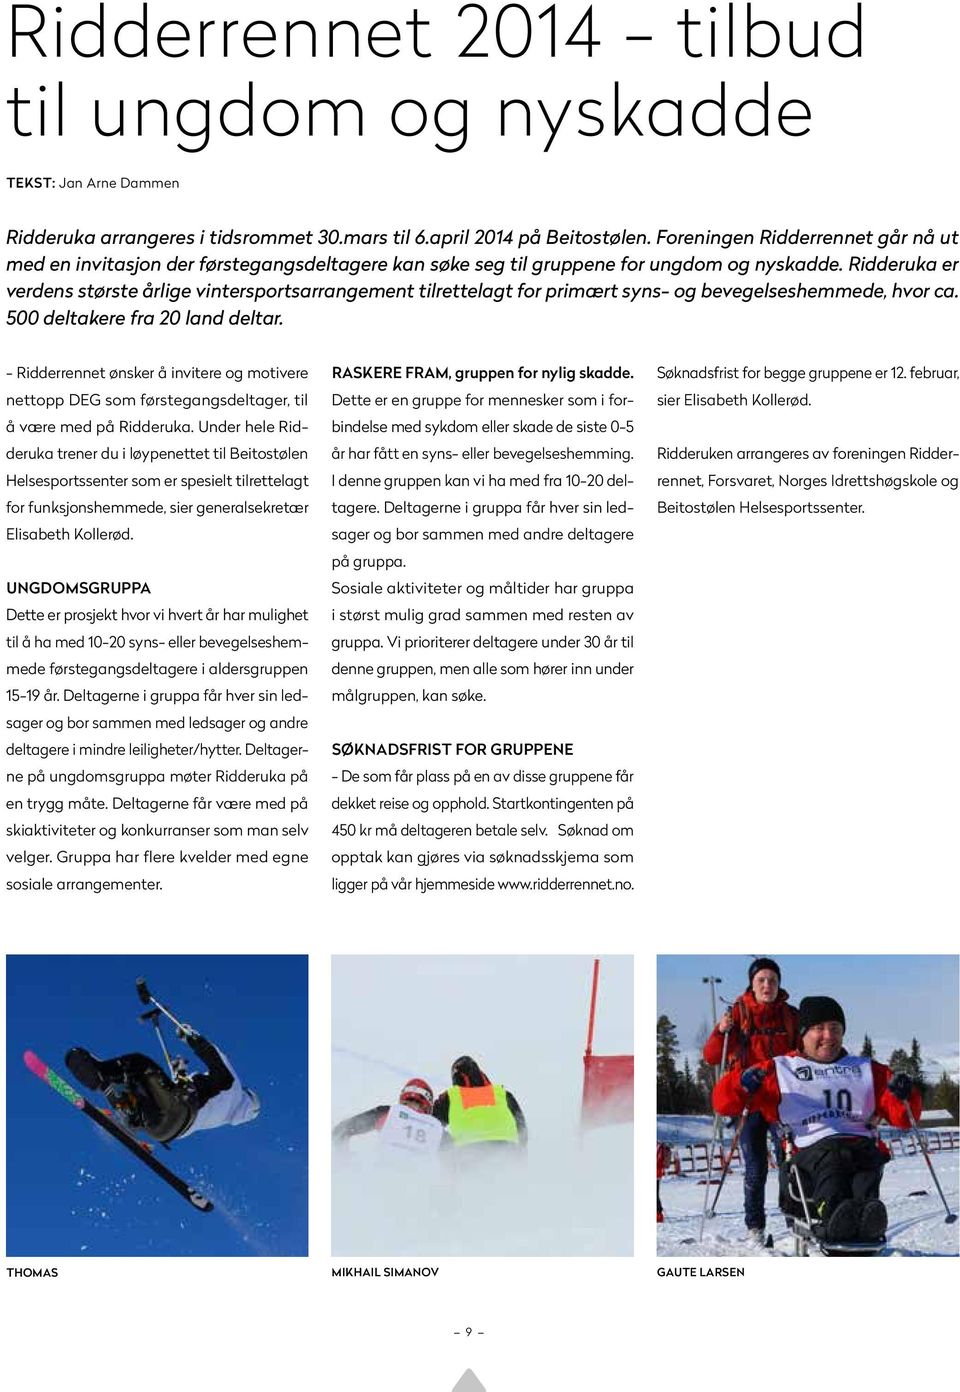 Ridderuka er verdens største årlige vintersportsarrangement tilrettelagt for primært syns- og bevegelseshemmede, hvor ca. 500 deltakere fra 20 land deltar.